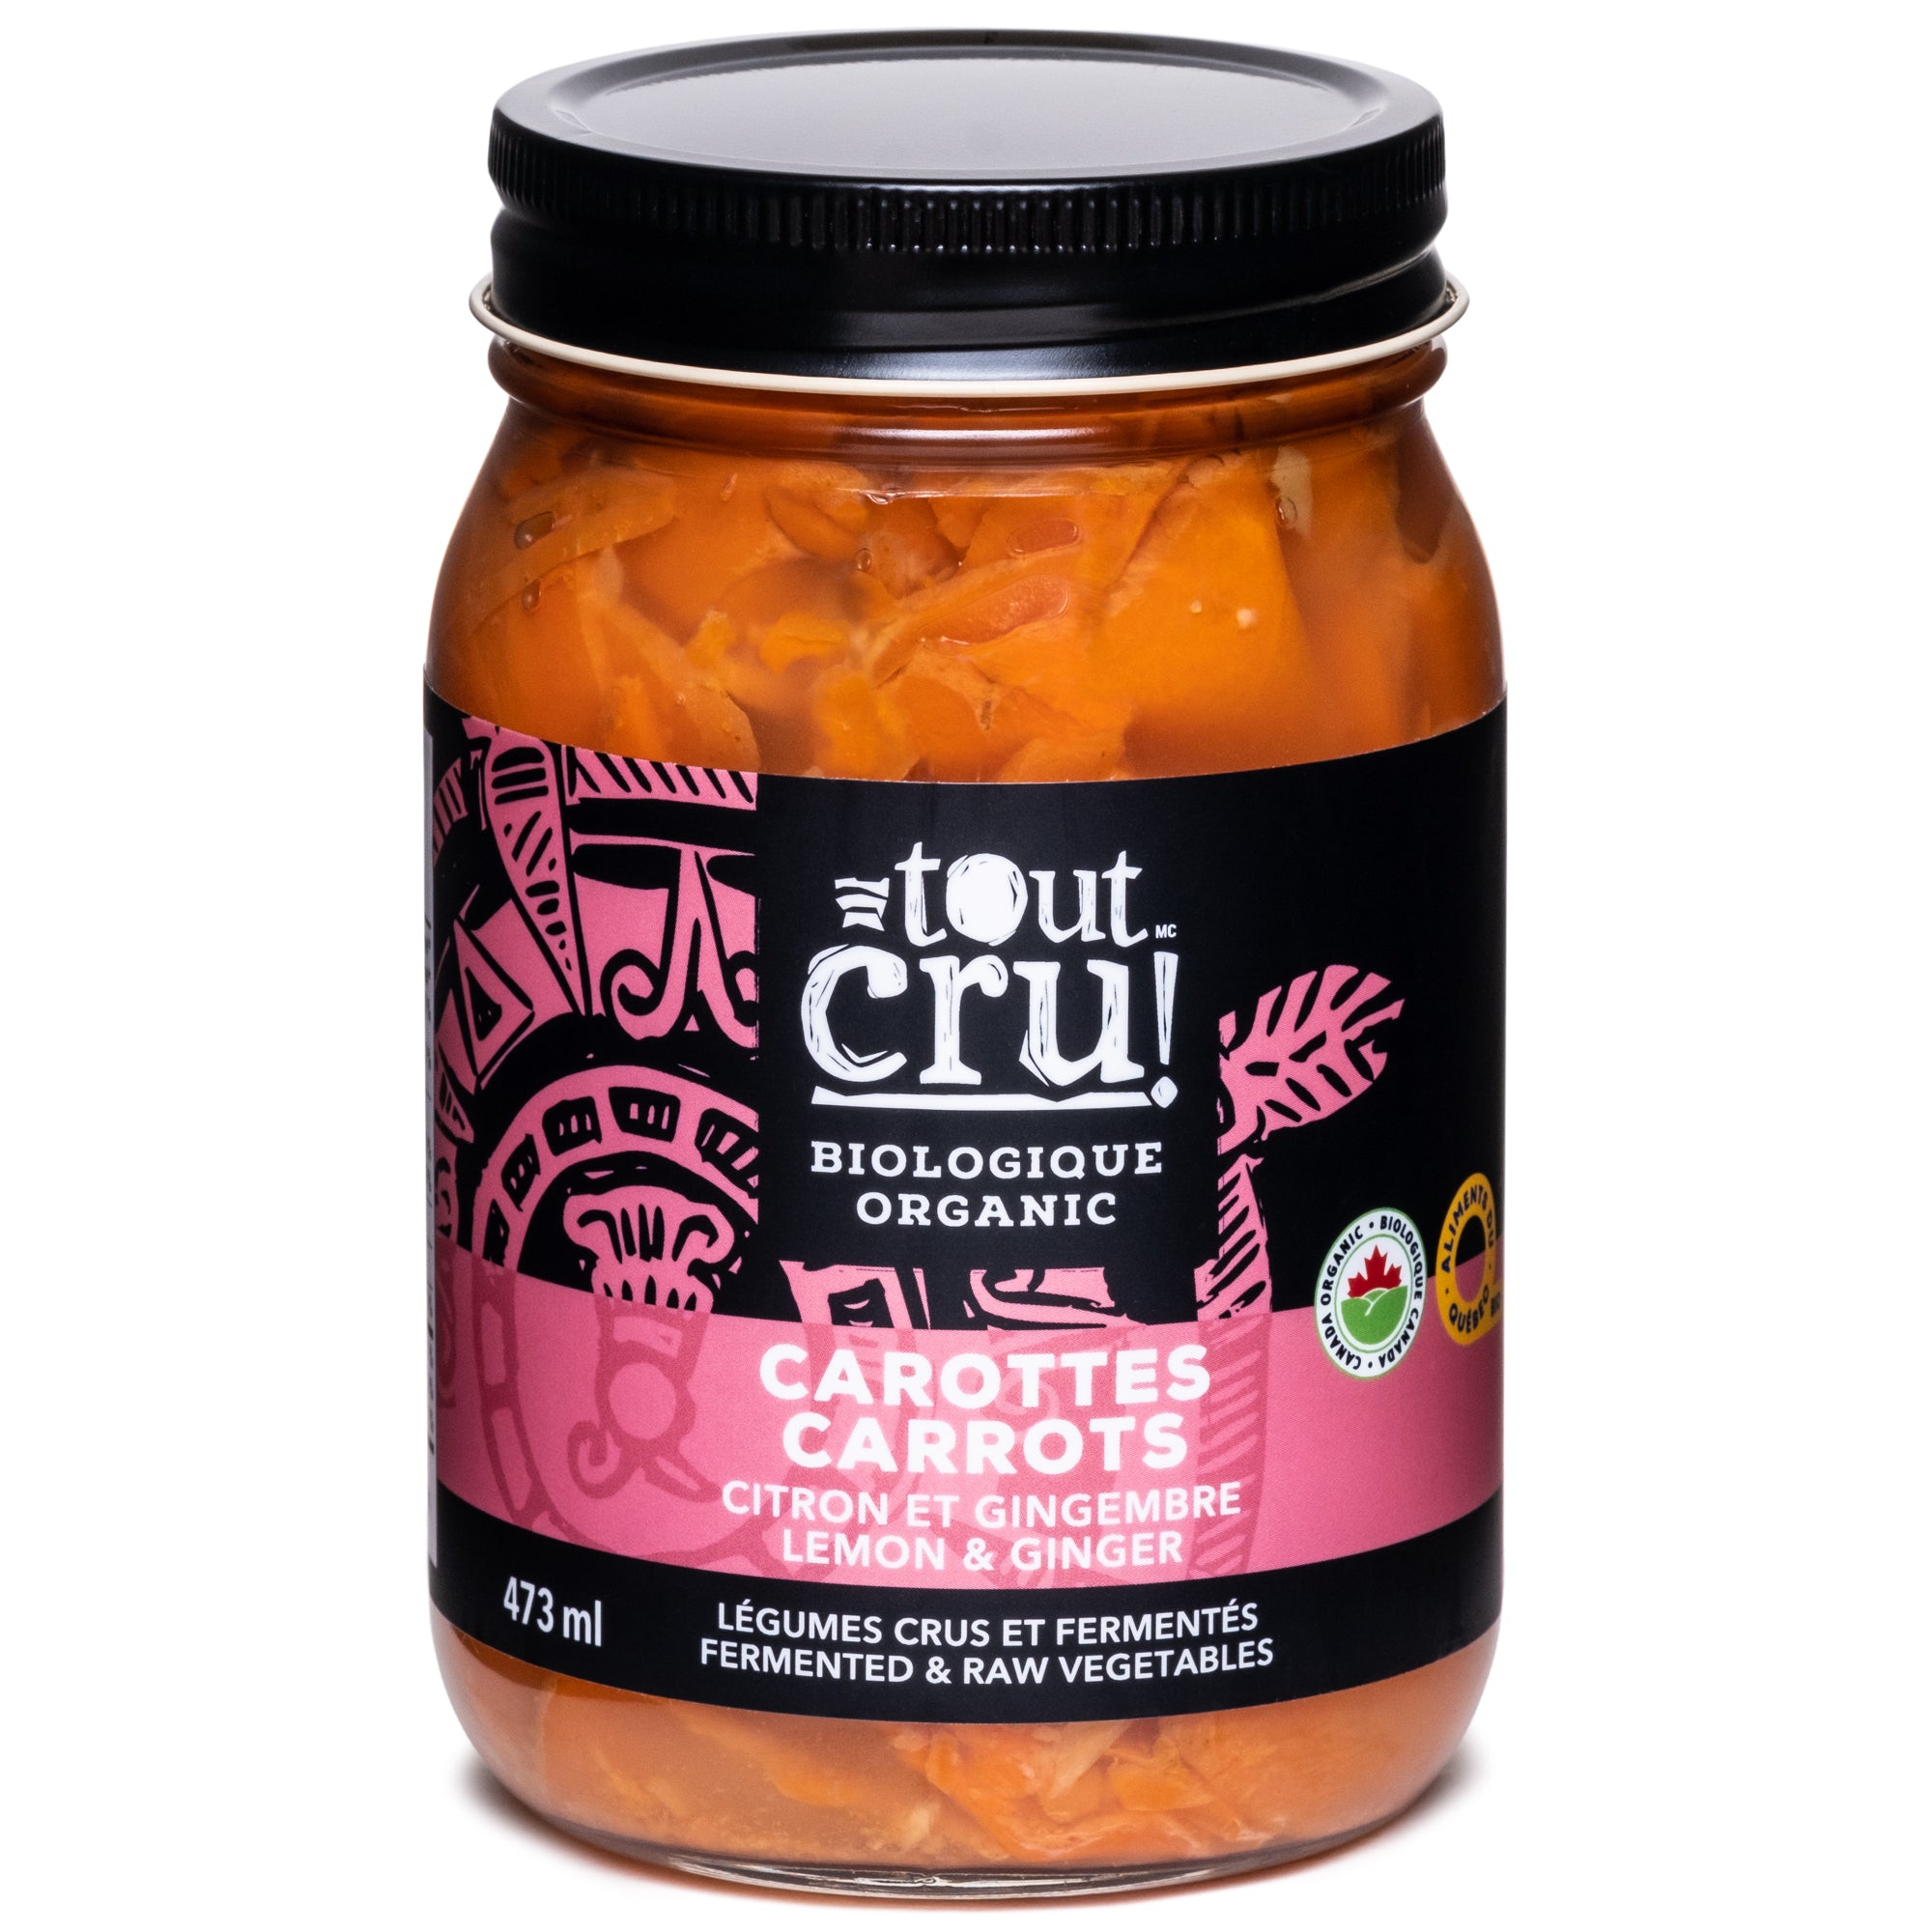 Organic carrots with lemon & ginger - Catrina - Tout cru! Fermentation